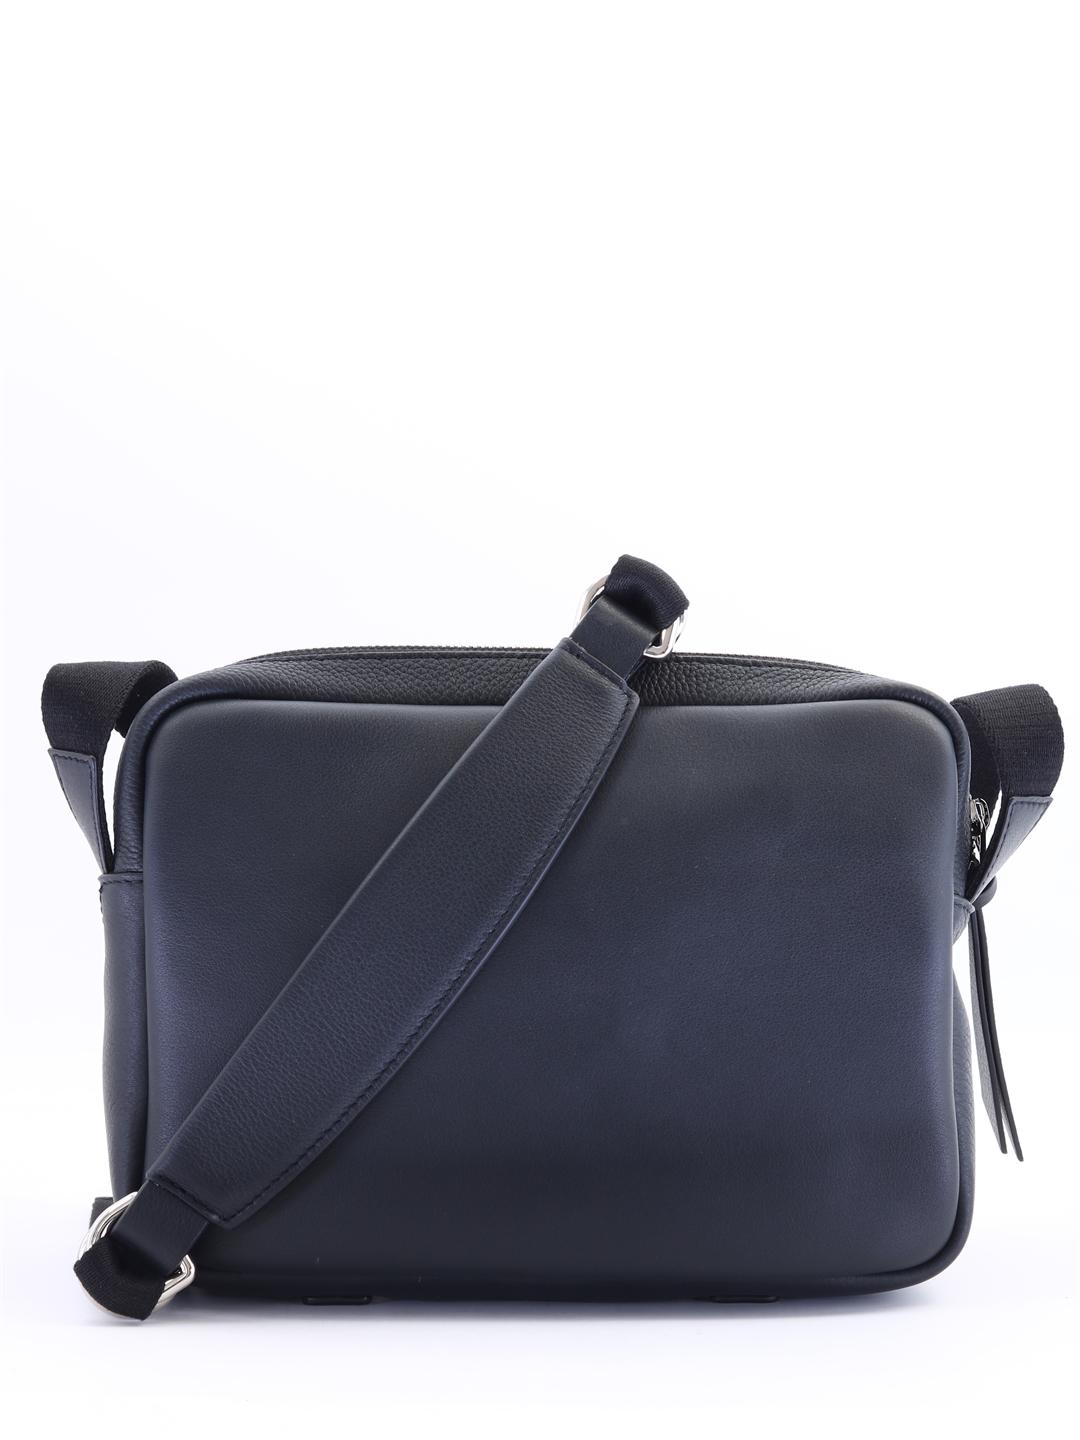 Loewe Military Messenger Bag Xs in Black for Men - Lyst